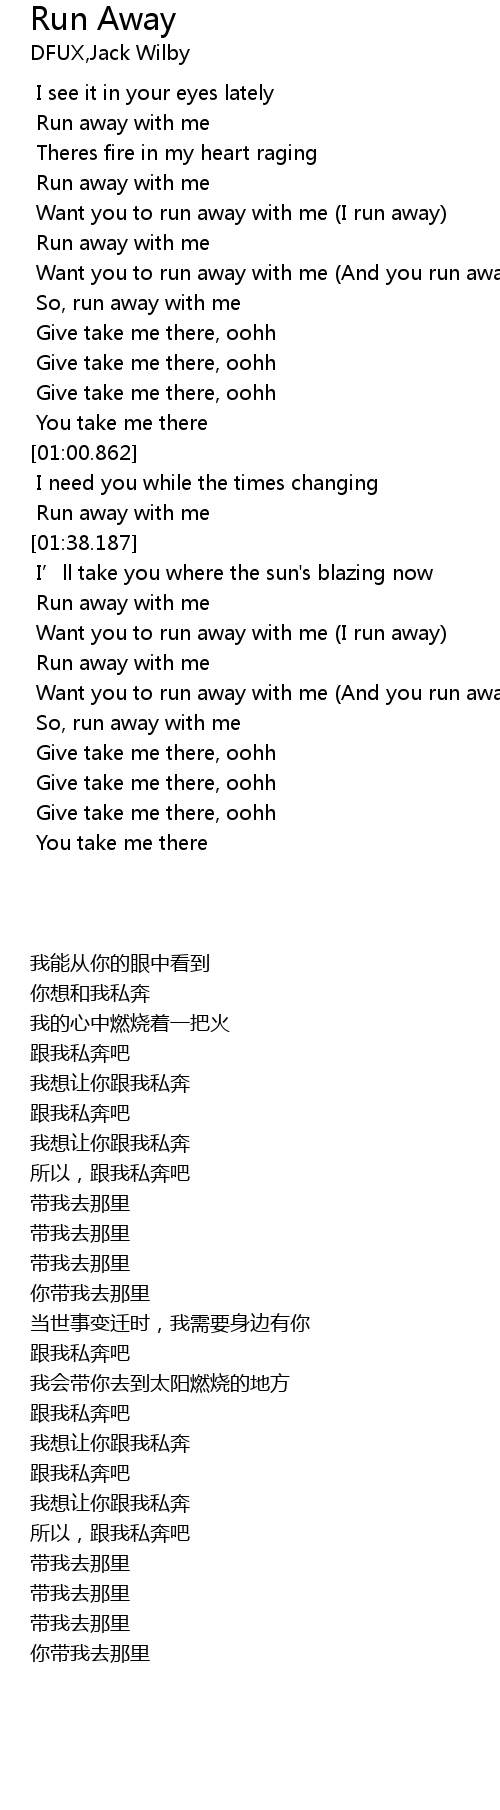 Run Away Lyrics